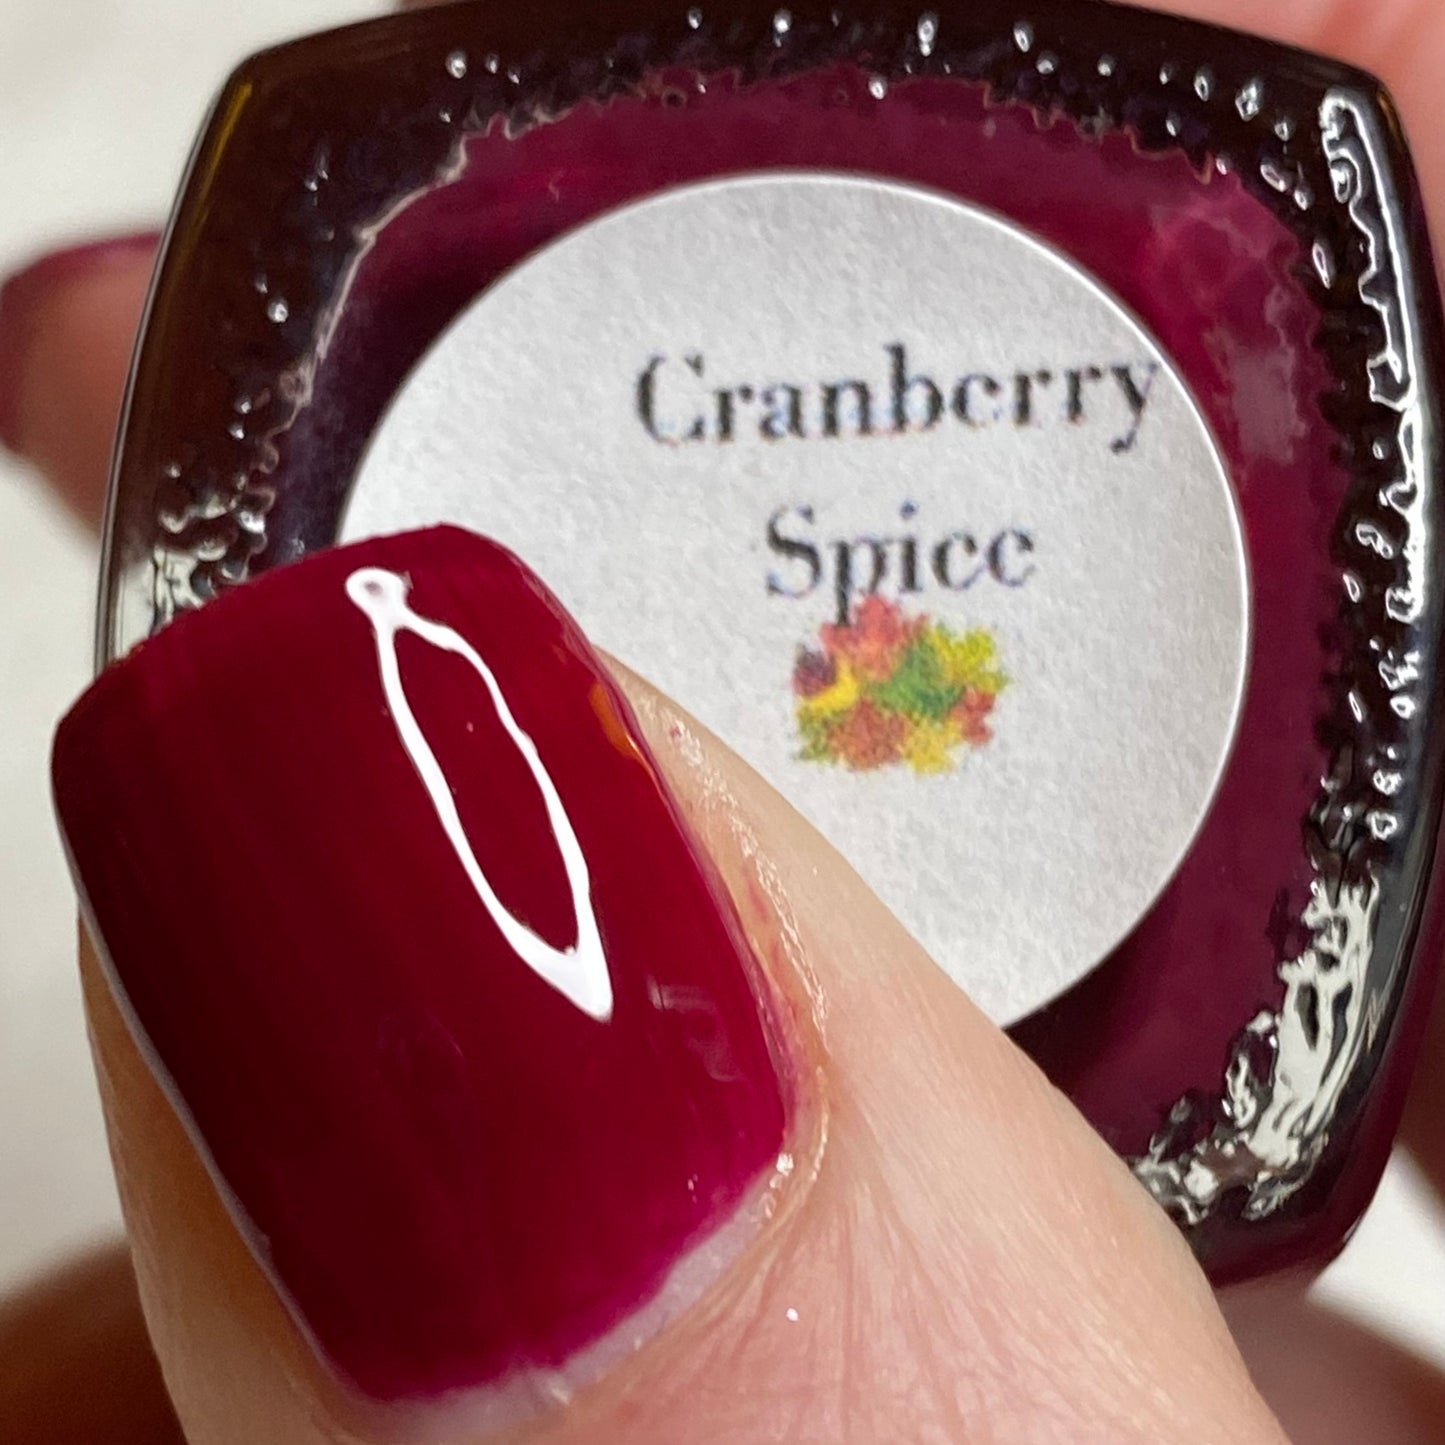 Cranberry Spice